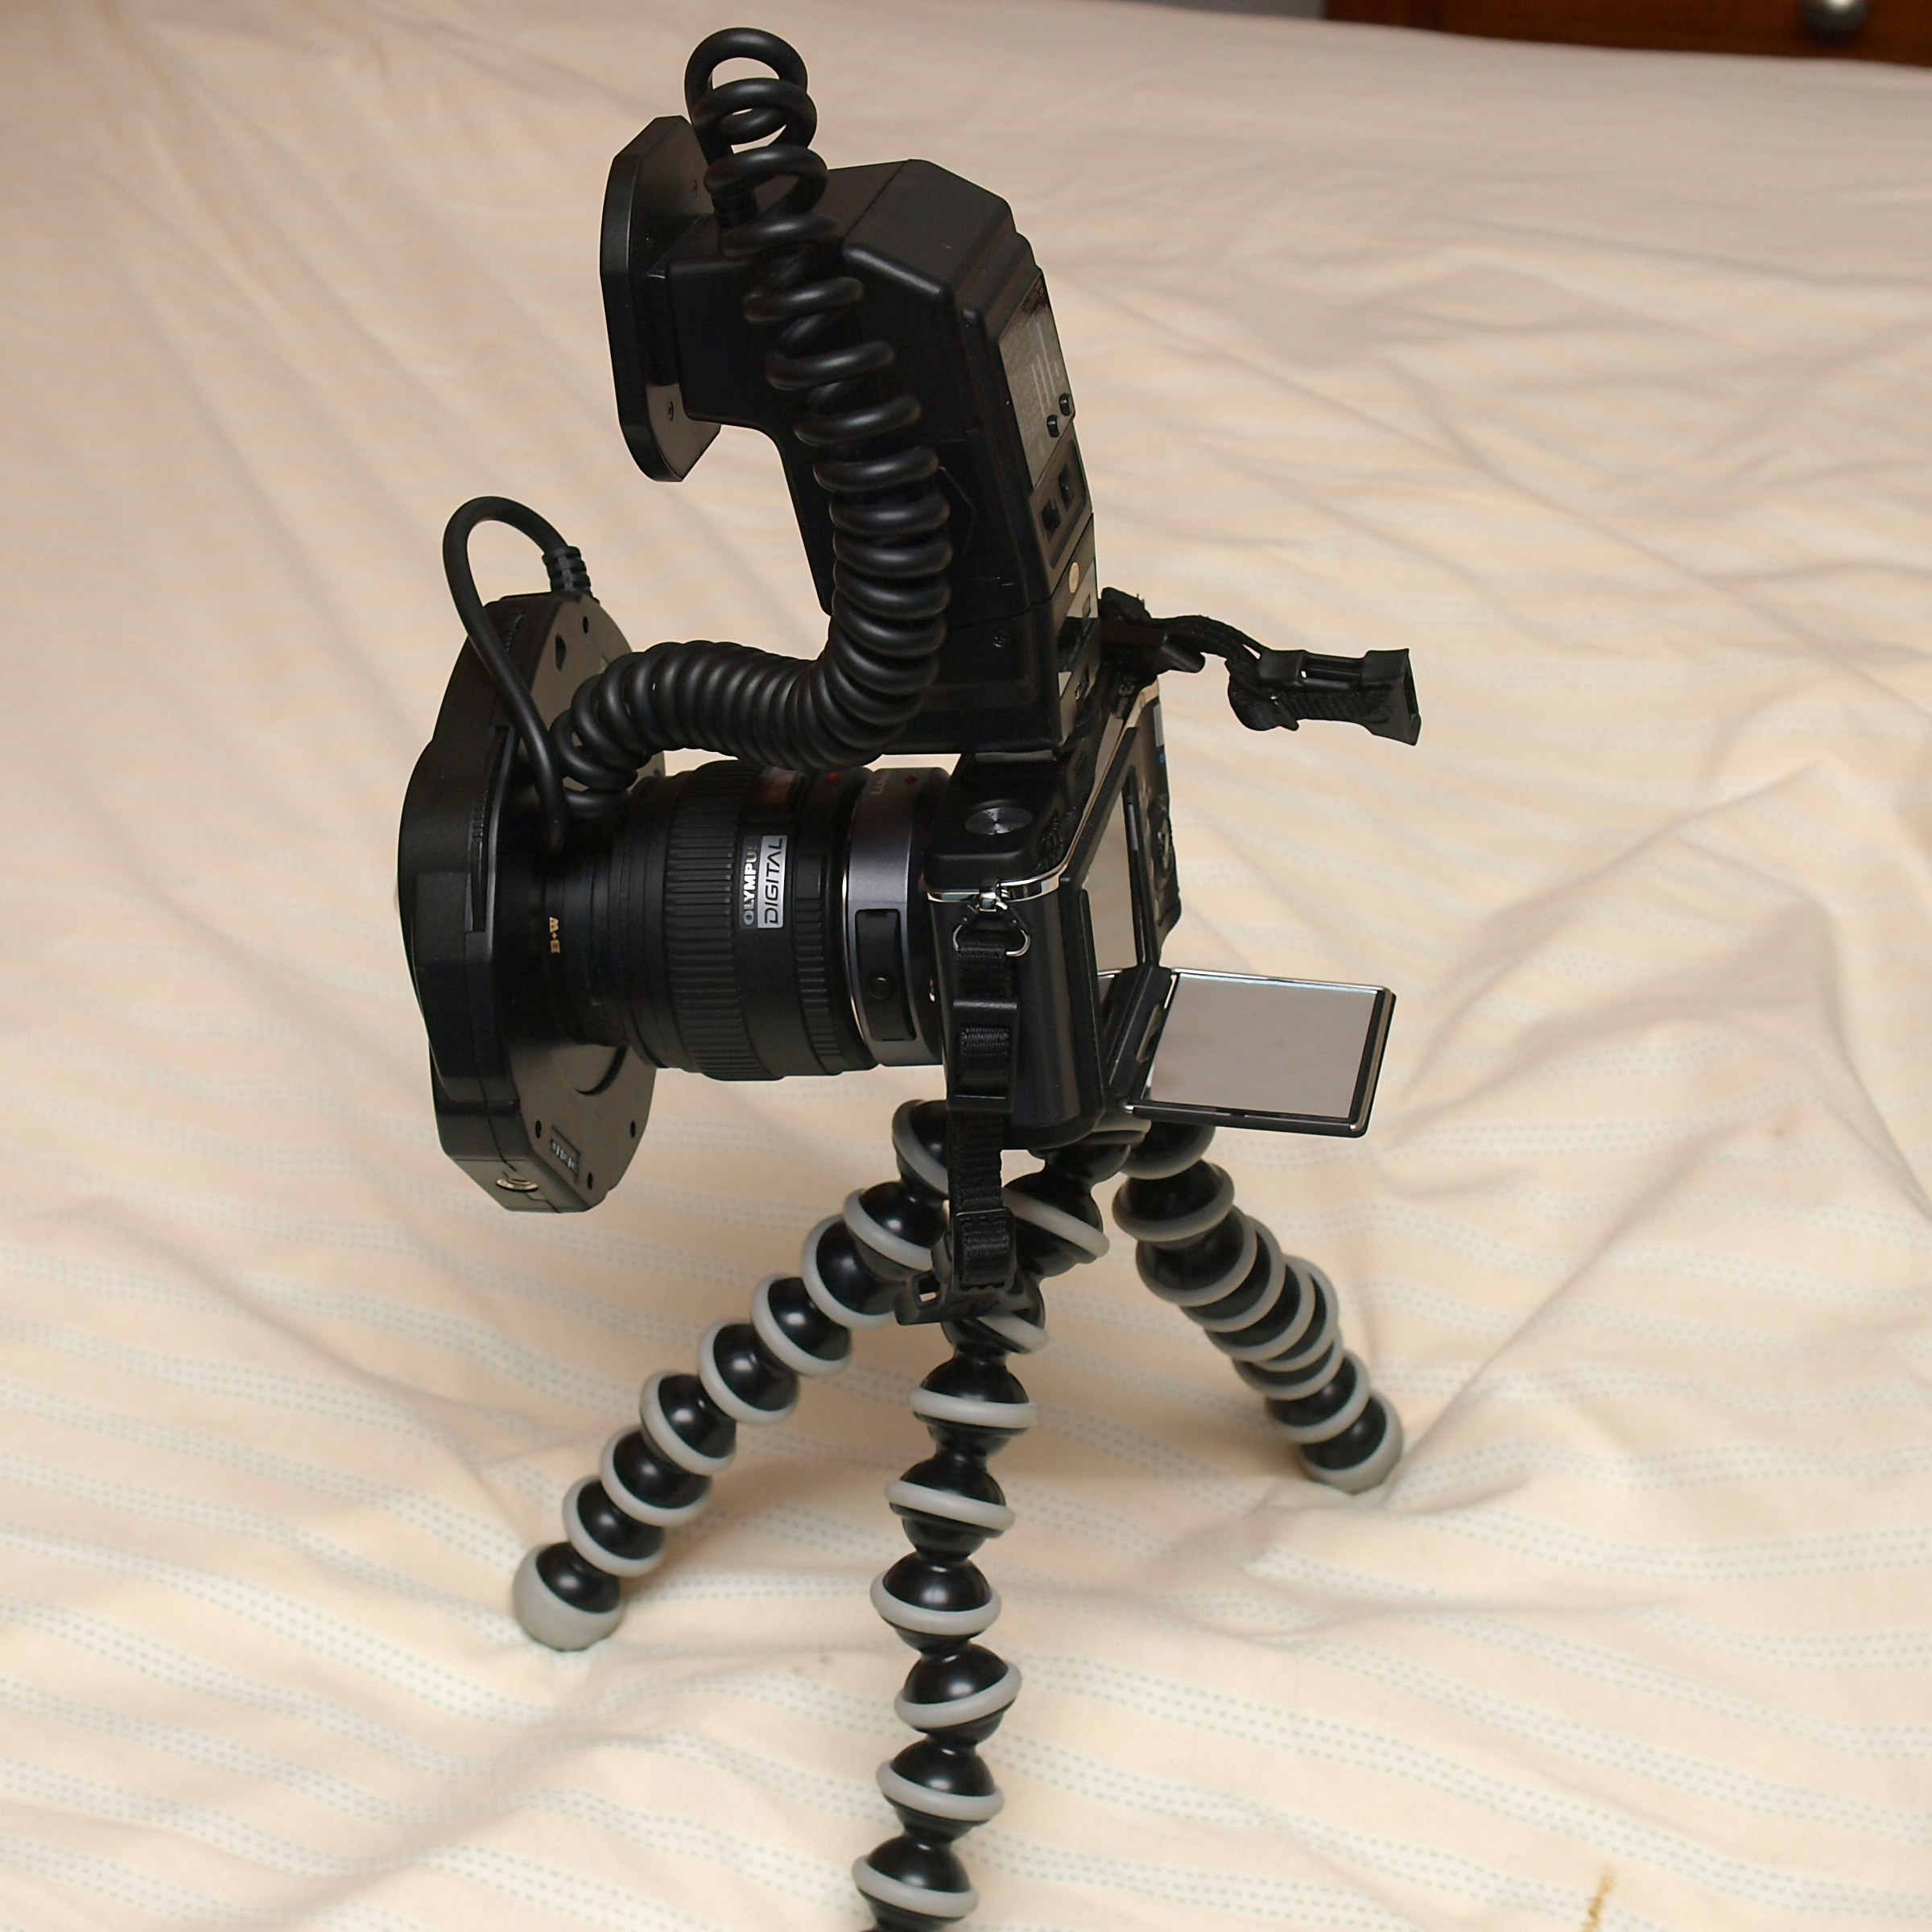 Olympus E-P2, Olympus 50mm lens, Promaster ring flash